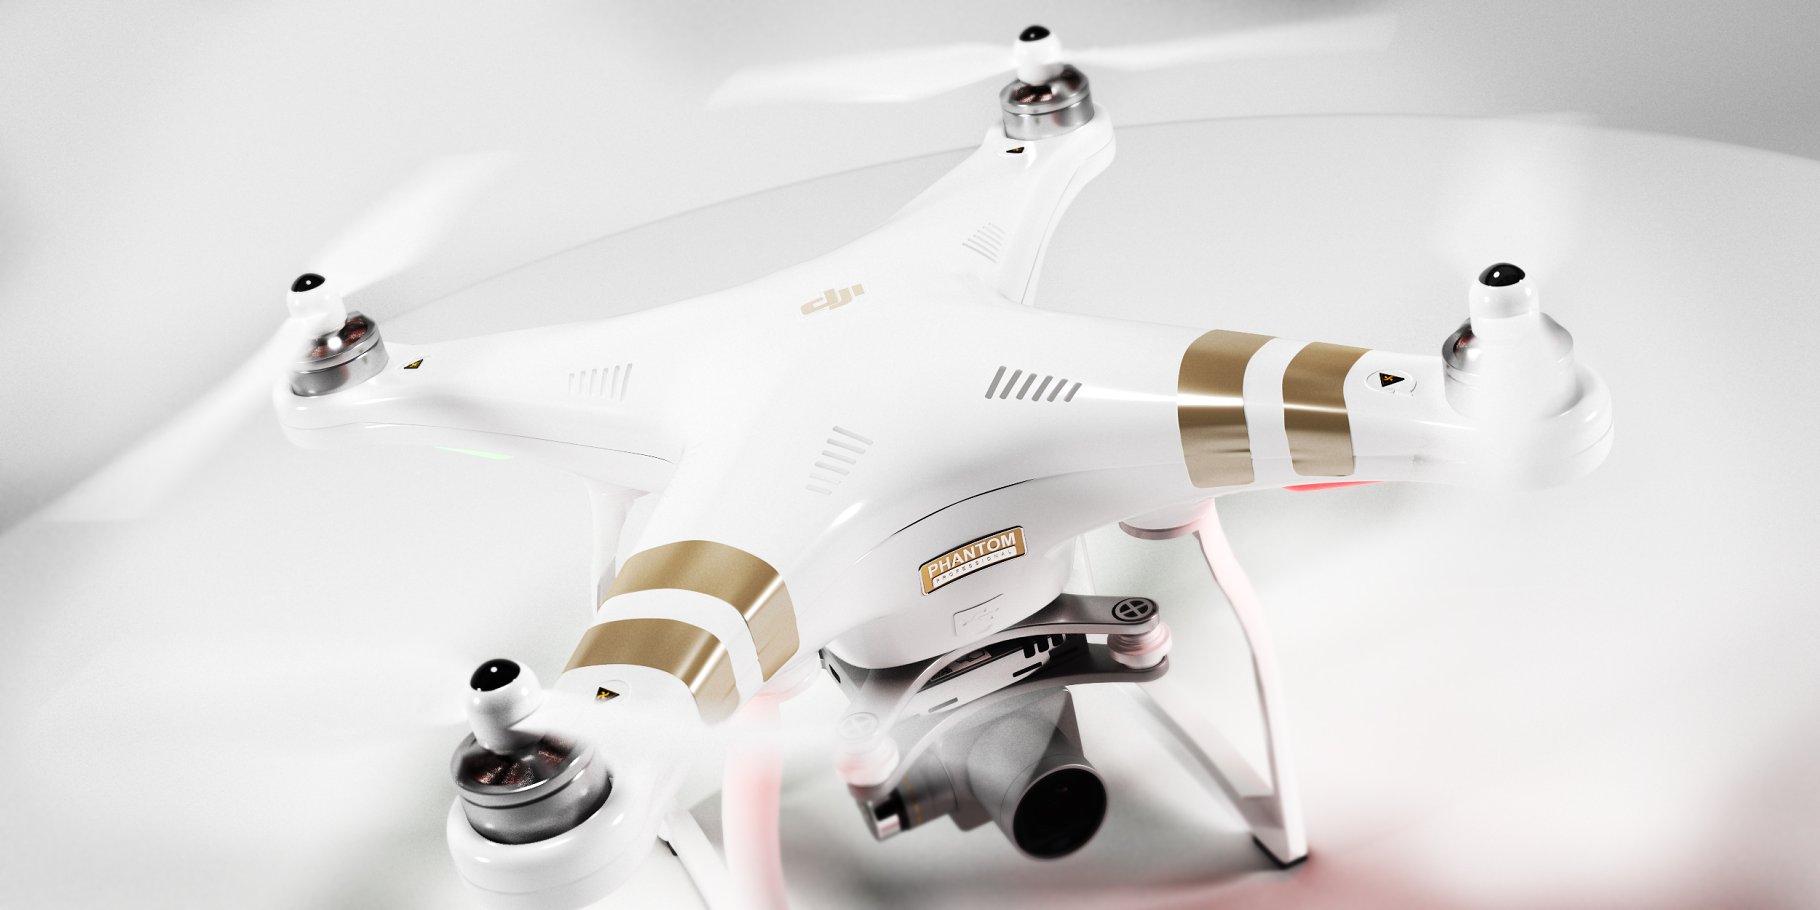 Spectacular rendering of a white DJI Phantom 3 drone